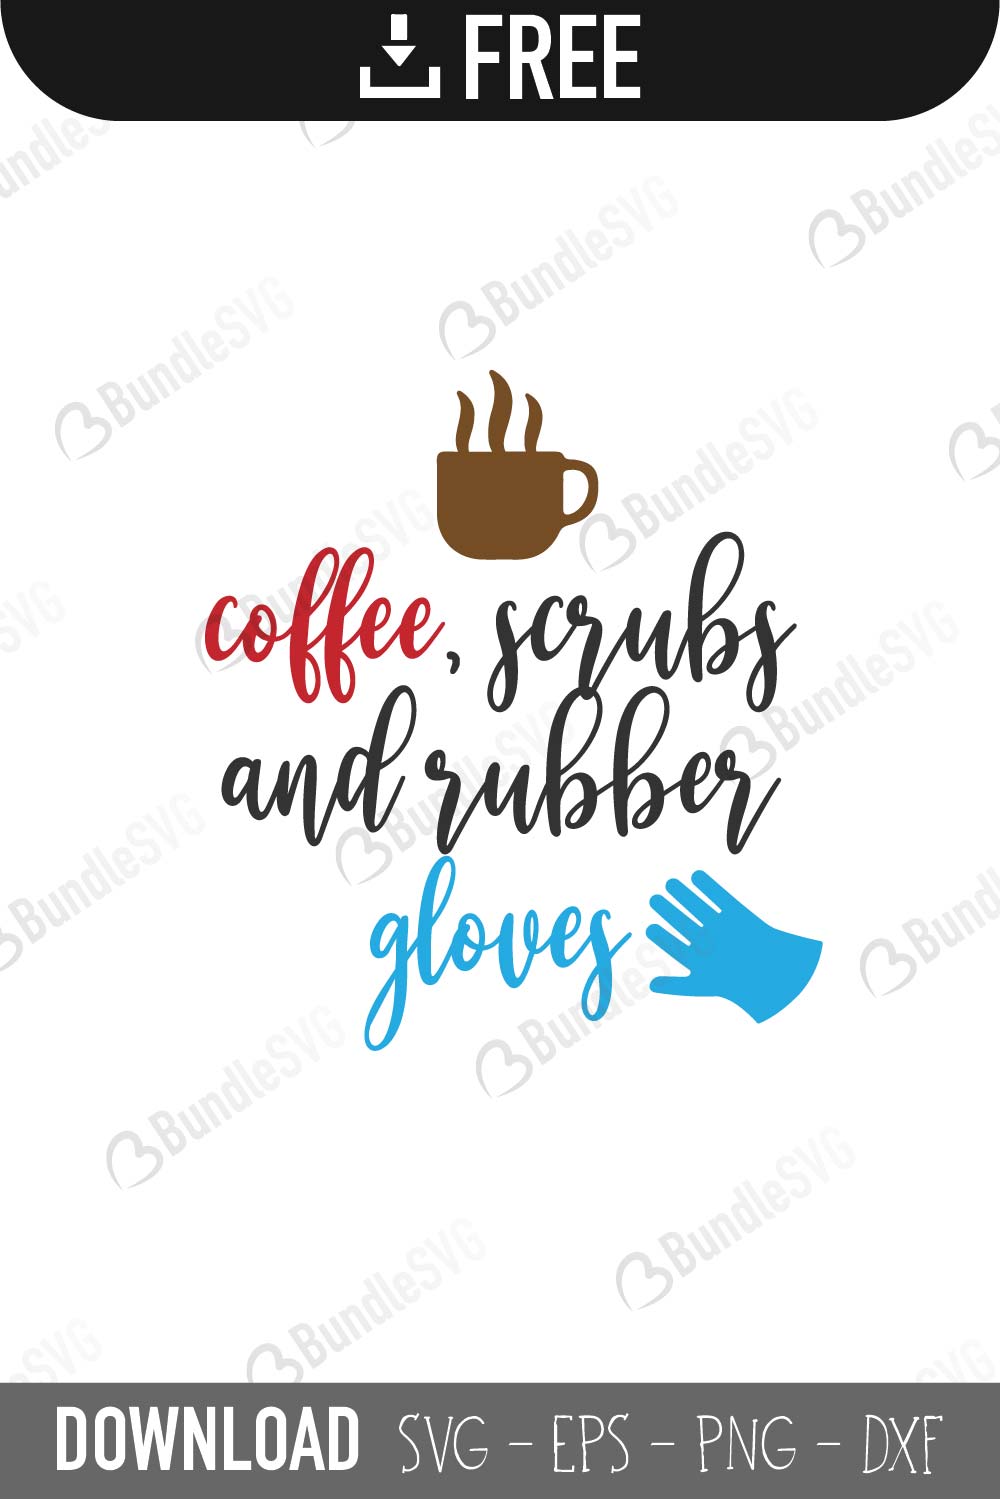 Download Coffee Scrubs And Rubber Gloves Svg Cut Files Free Download Bundlesvg